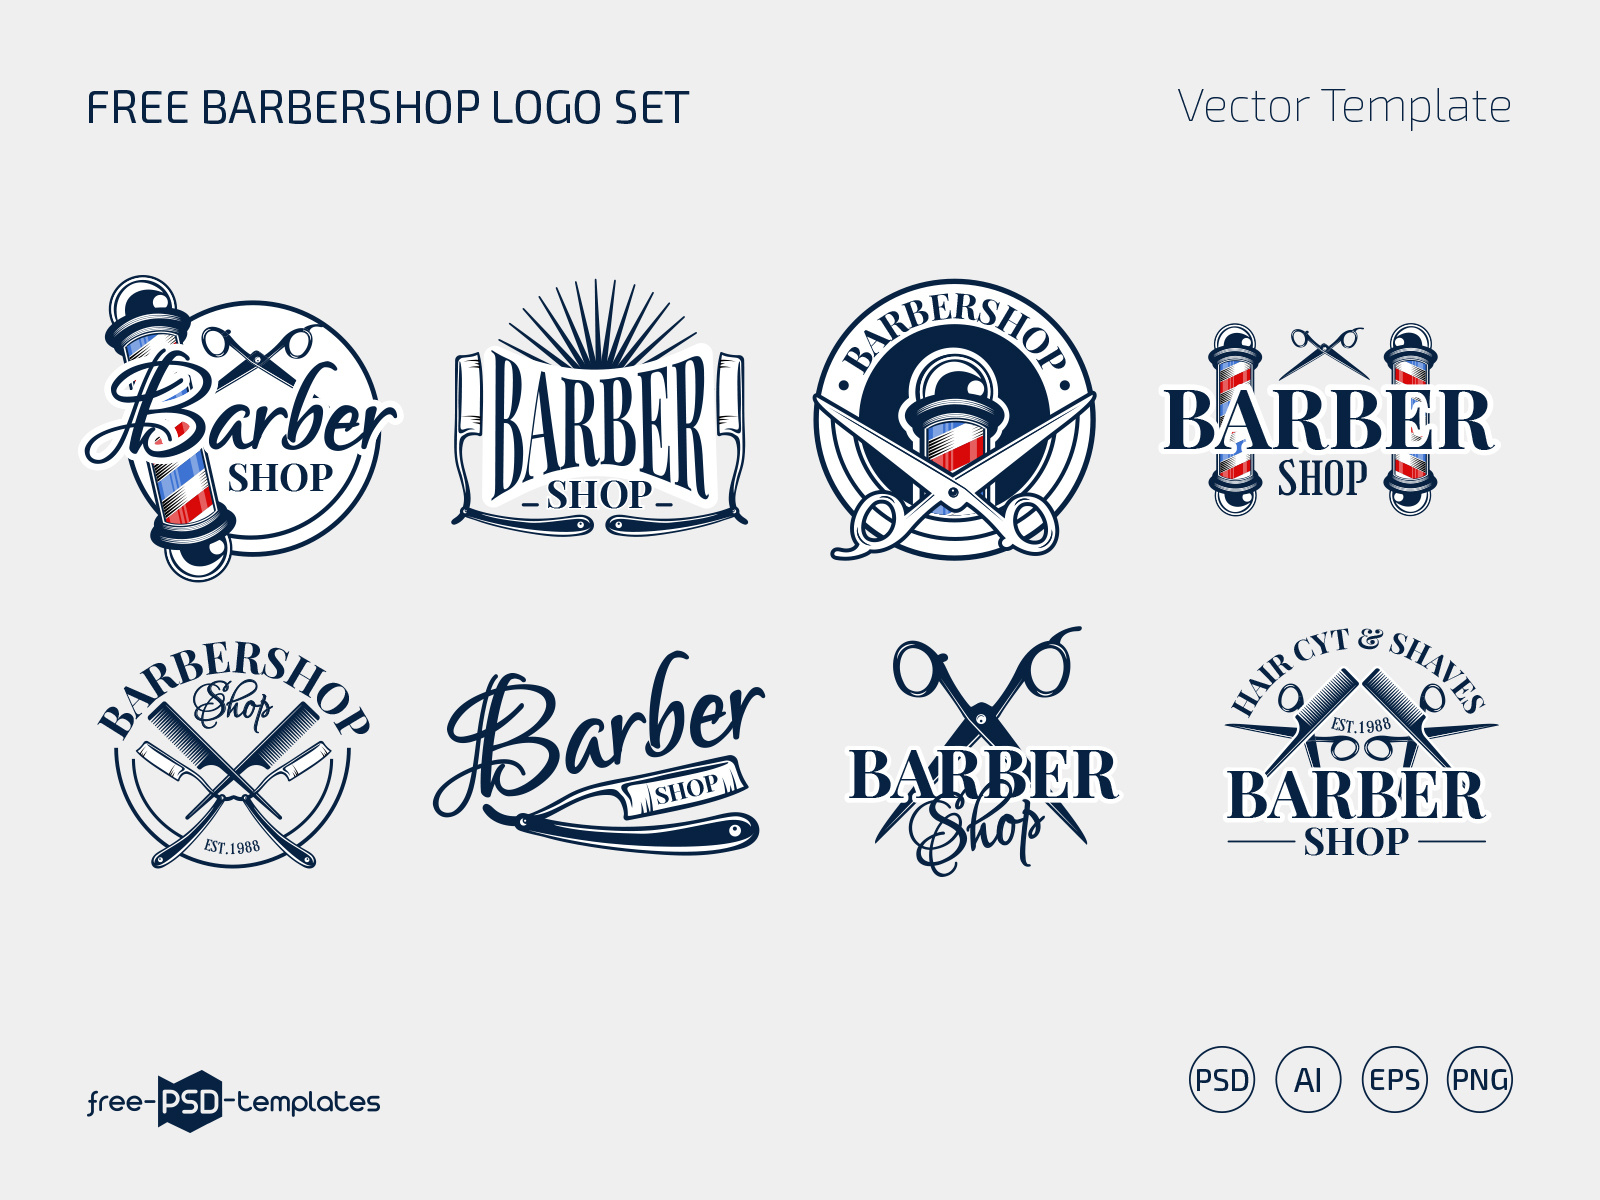 Barber Shop Design Logo PNG Vector (AI) Free Download